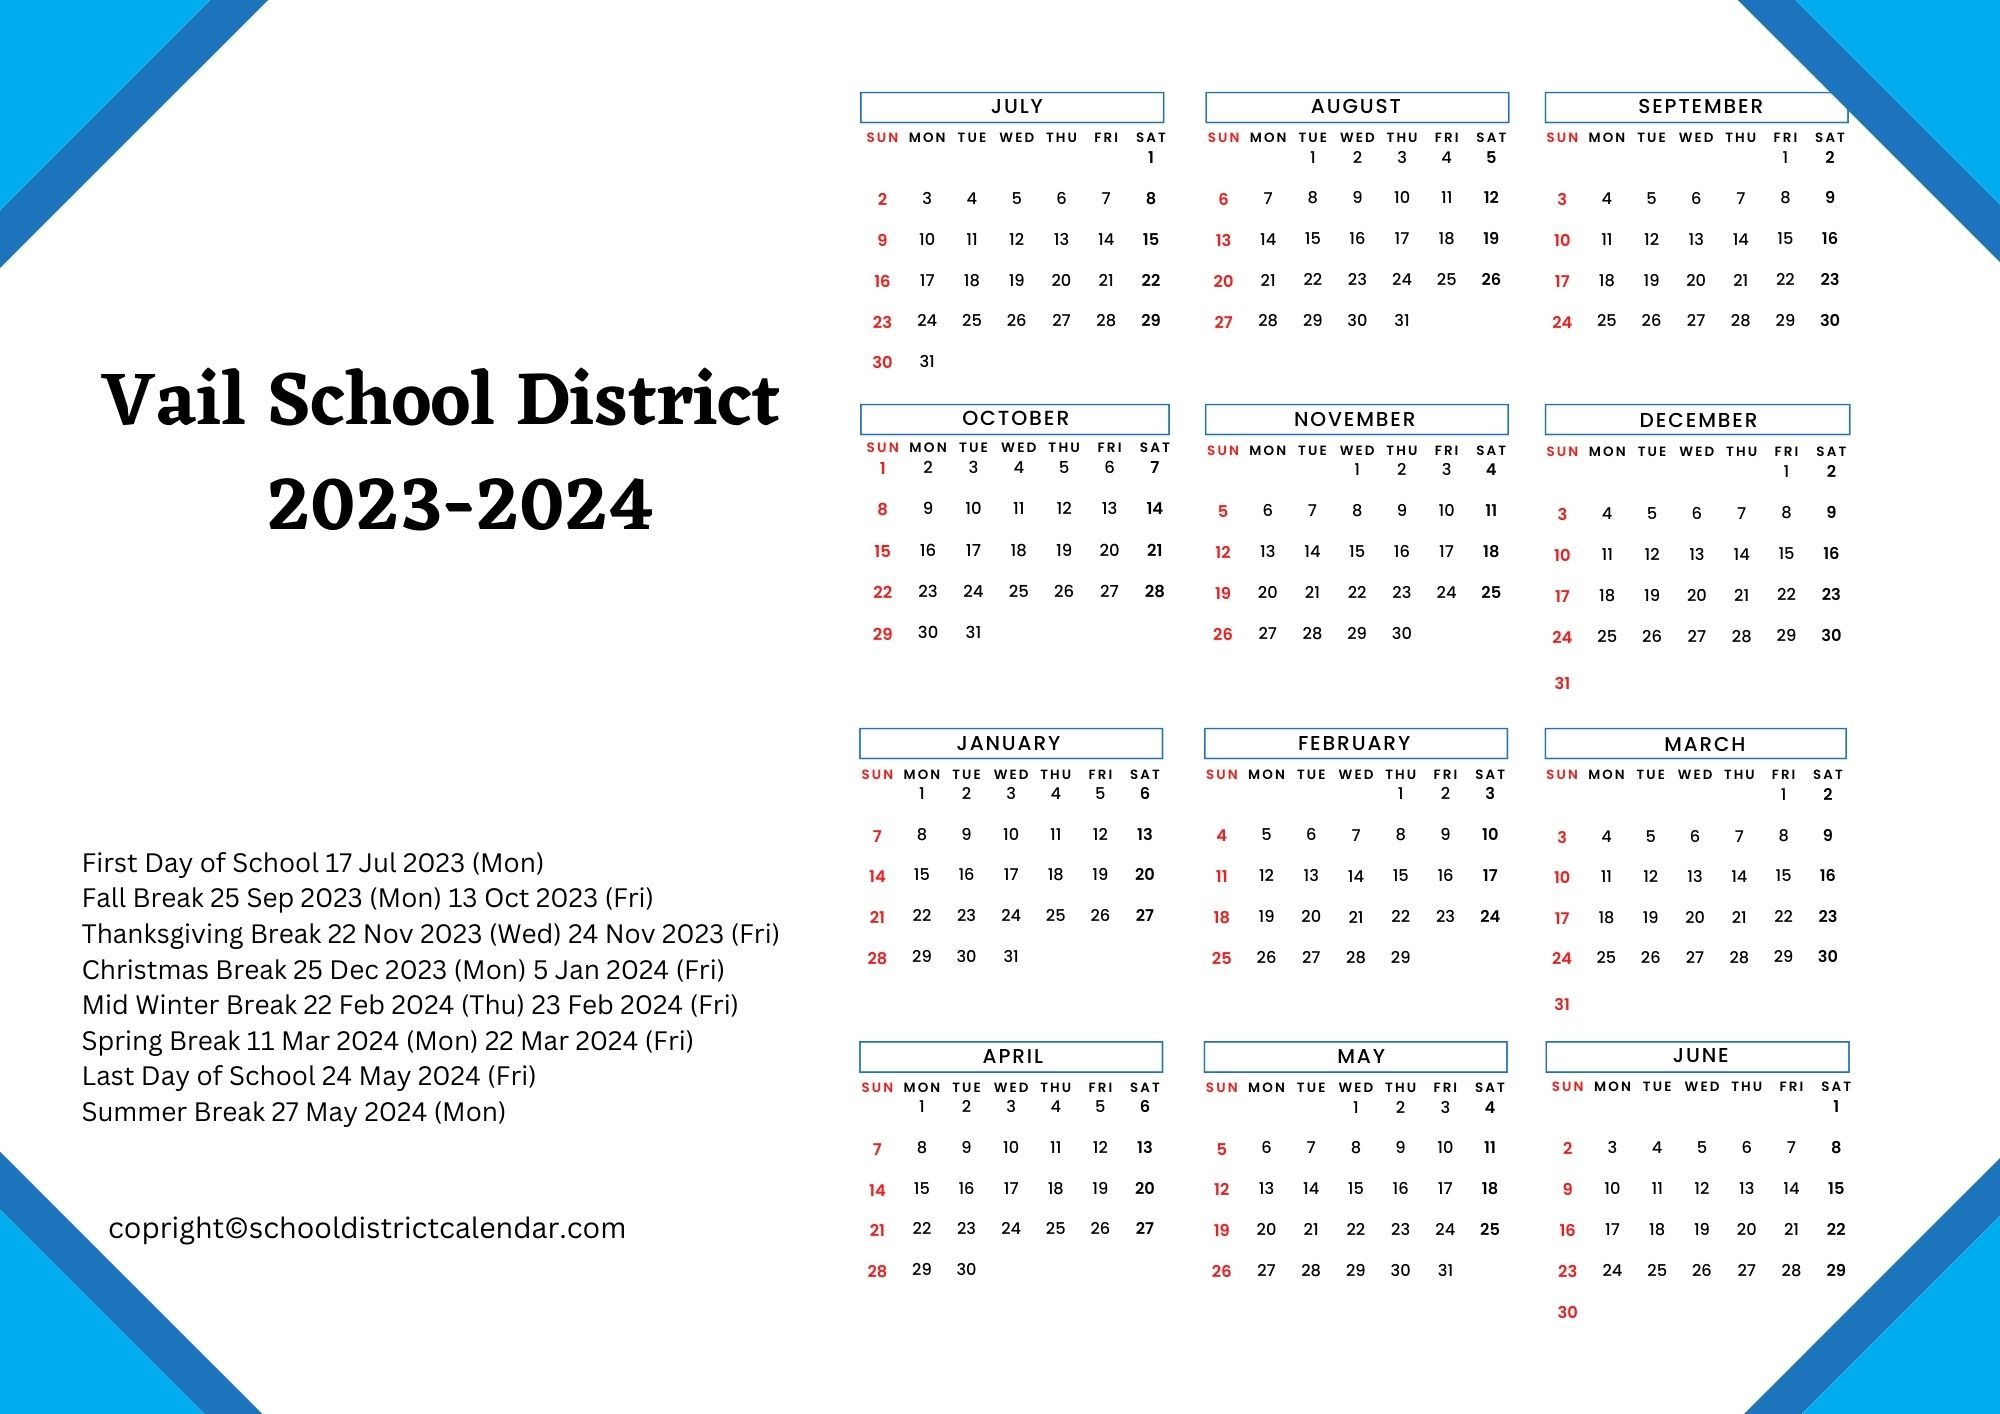 Vail School District Calendar Holidays 20232024